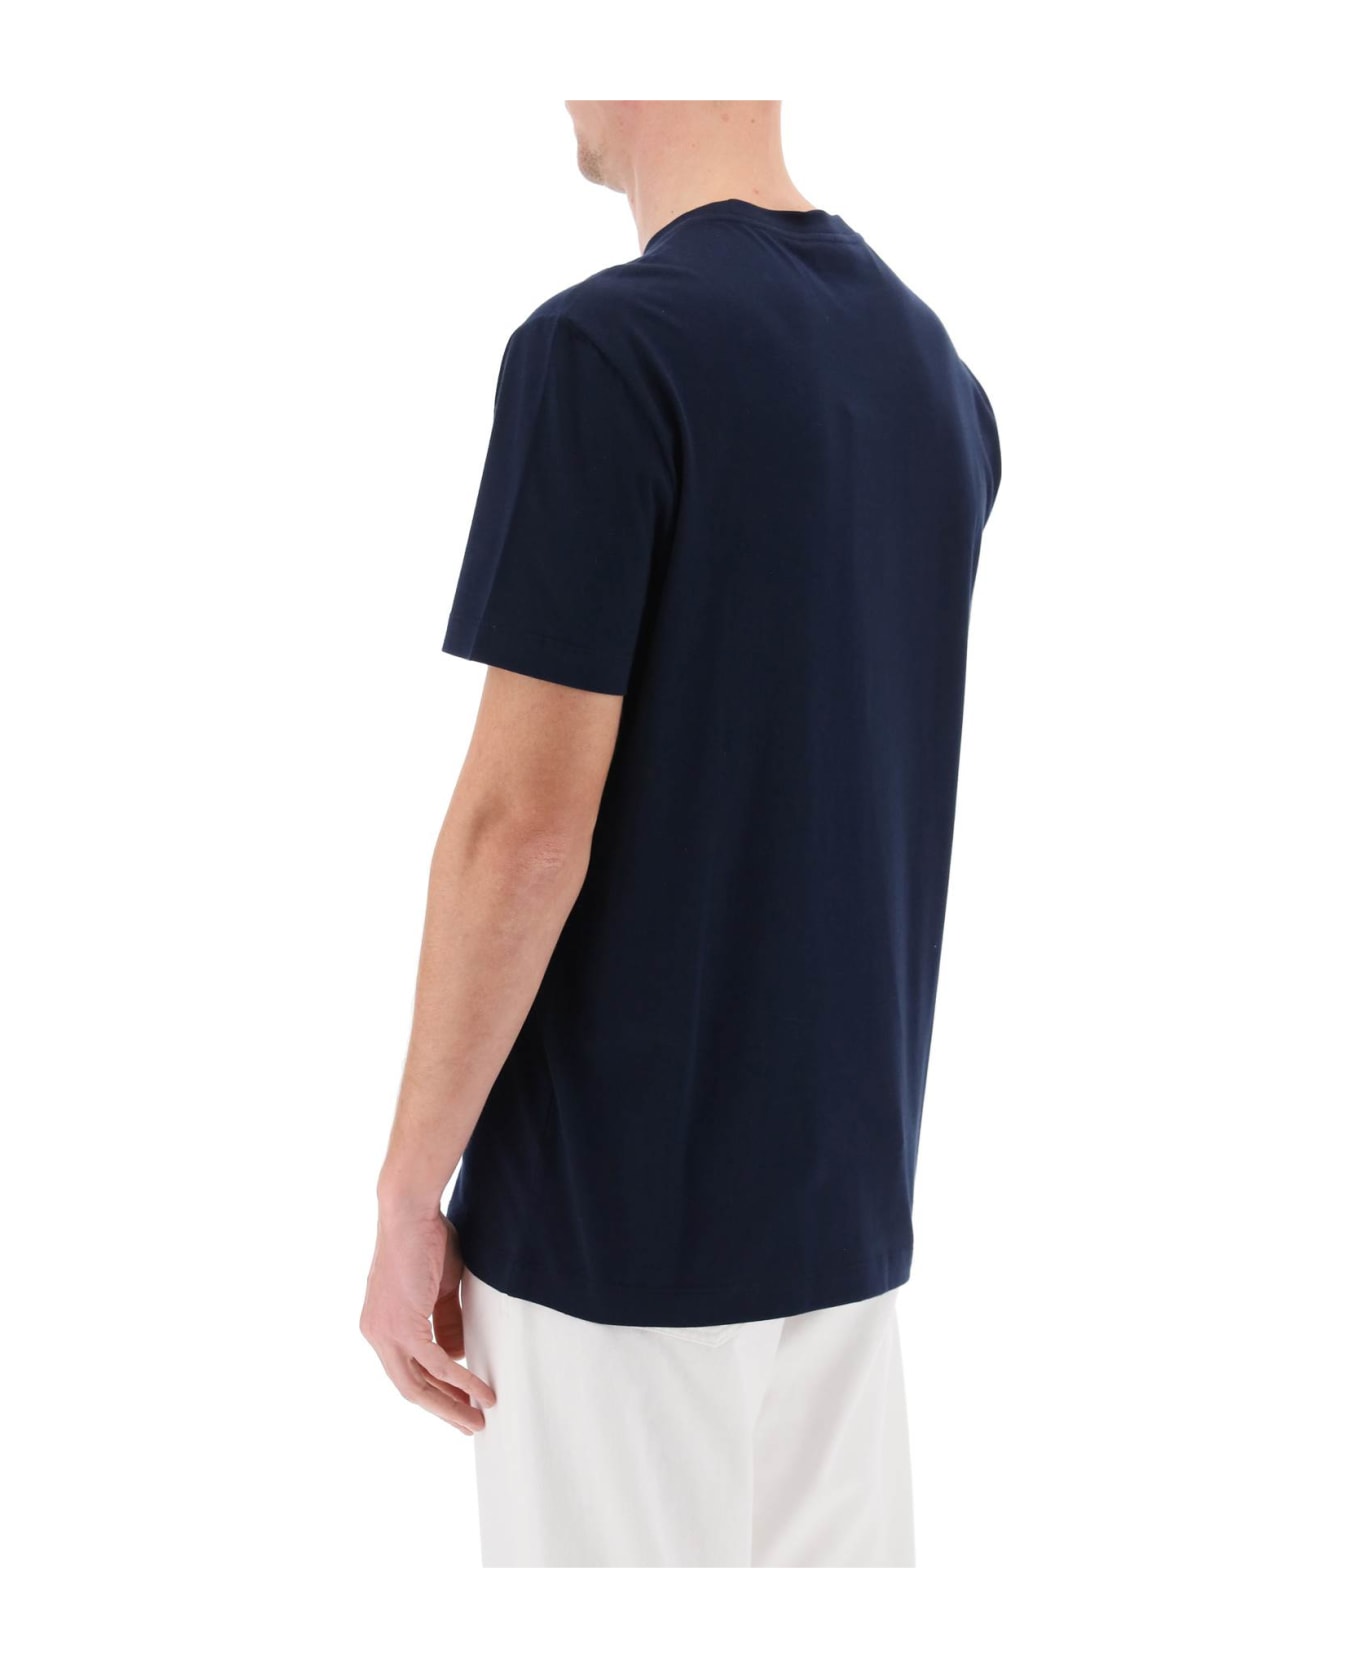 Versace Printed Cotton T-shirt - Blue